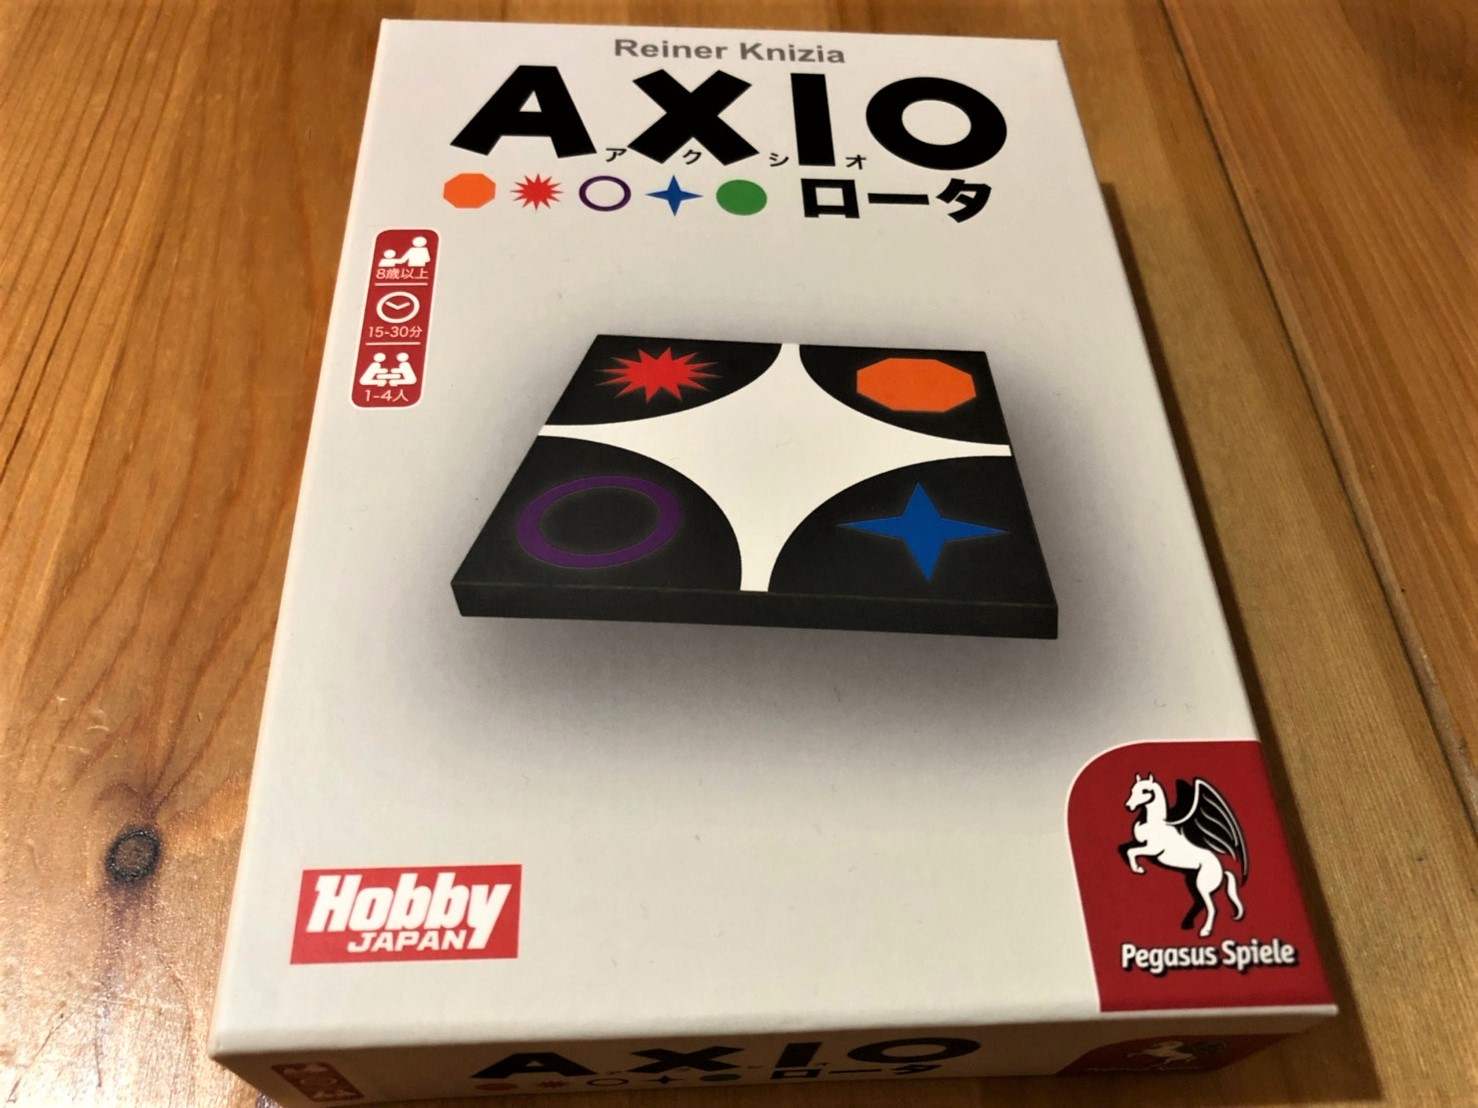 「AXIO(アクシオ)ロータ」のボックスアート